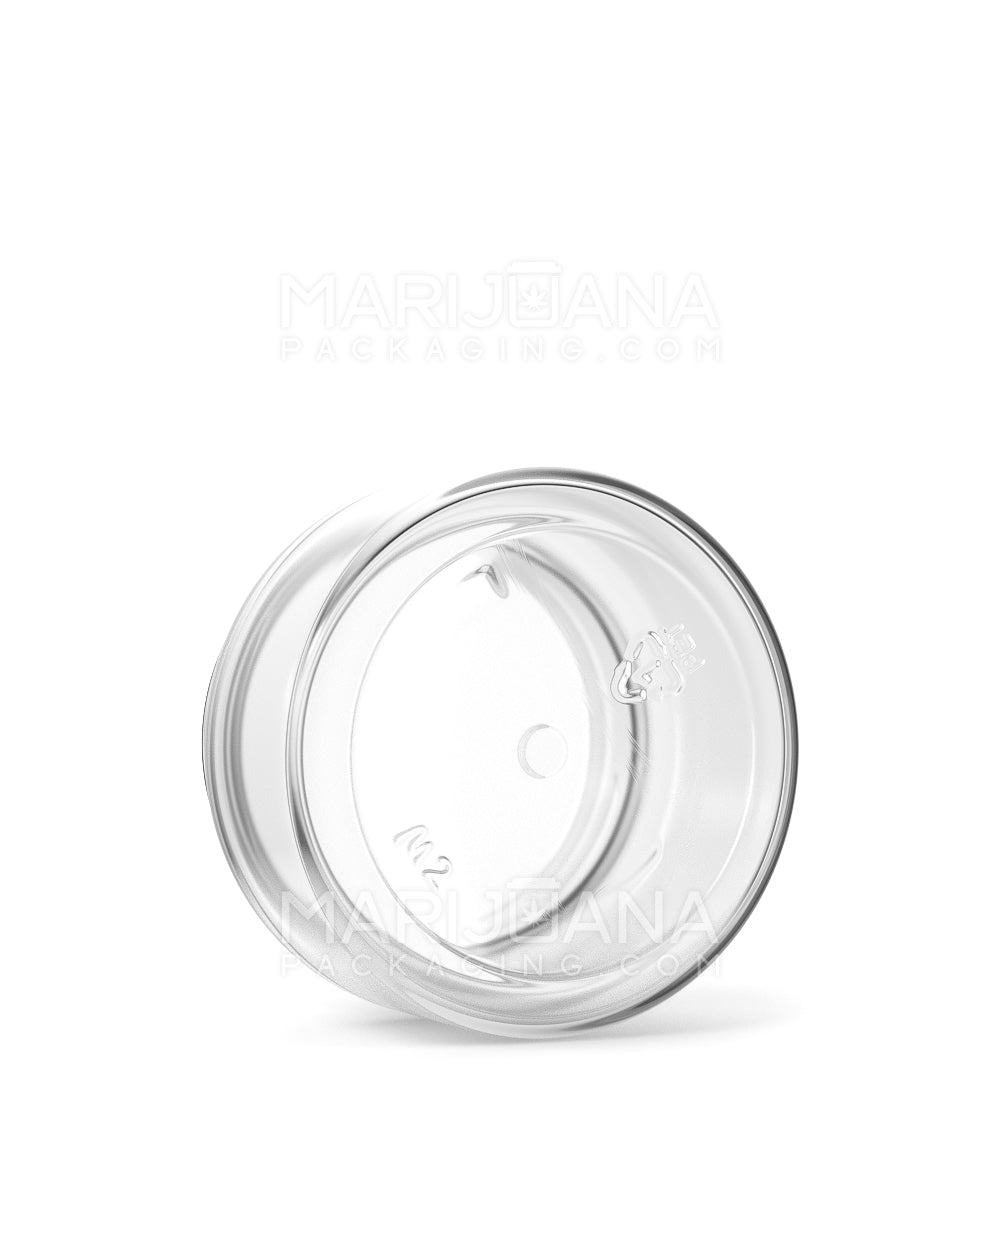 Straight Sided Clear Plastic Jars | 53mm - 2oz | Sample - 4